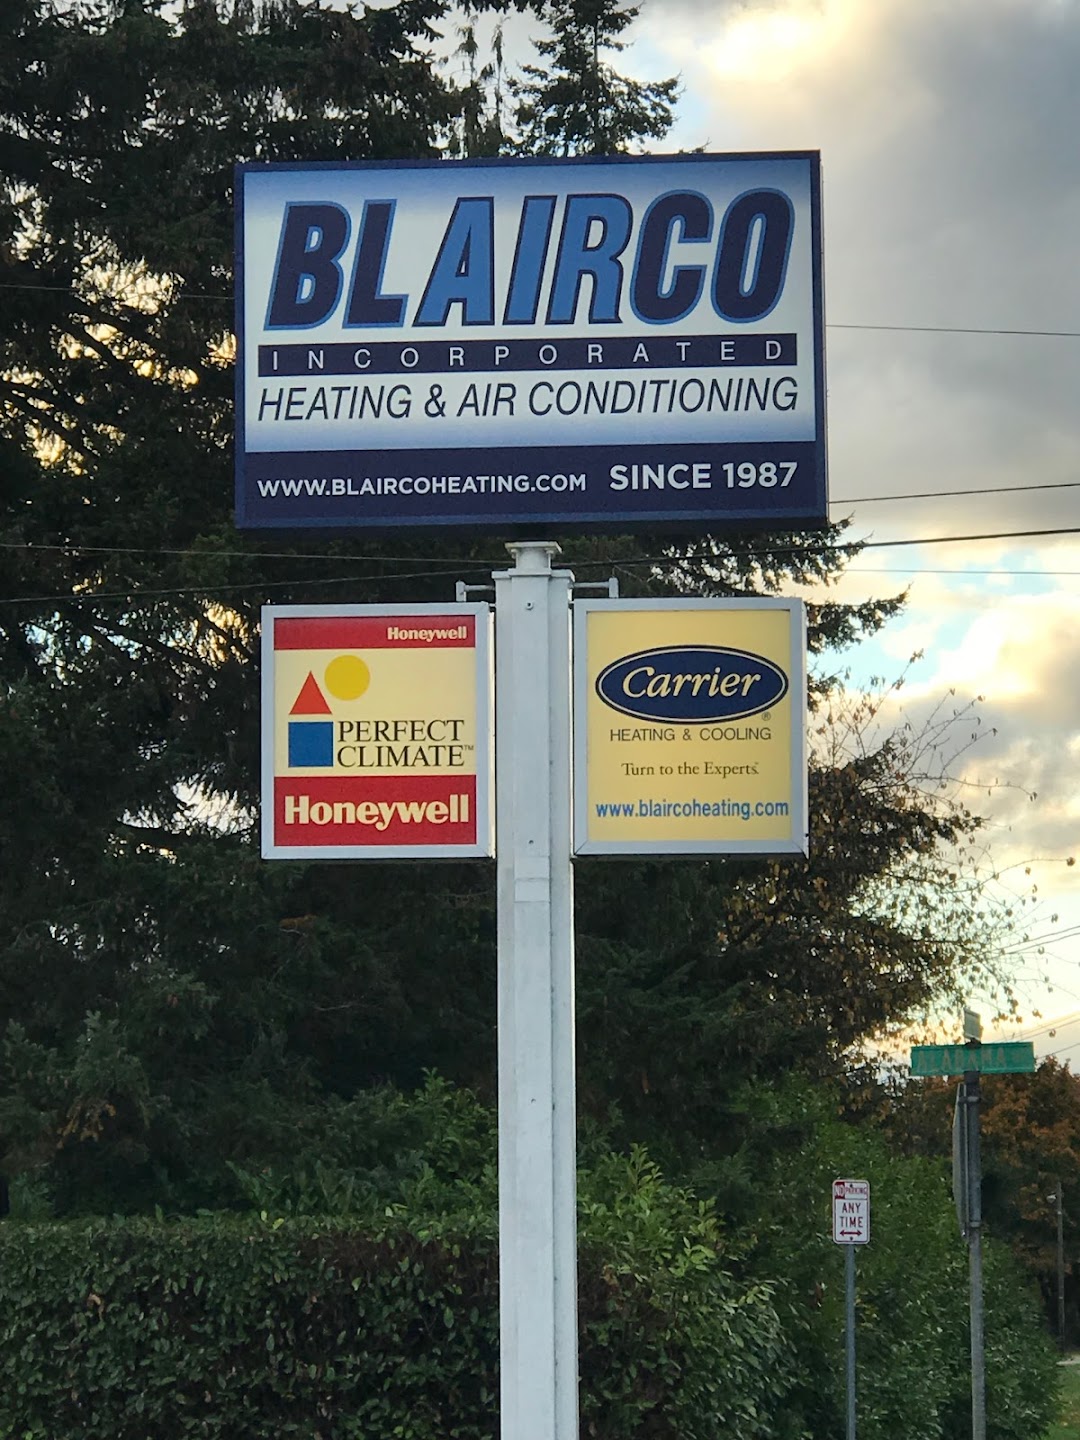 Blairco Heating & Air Conditioning